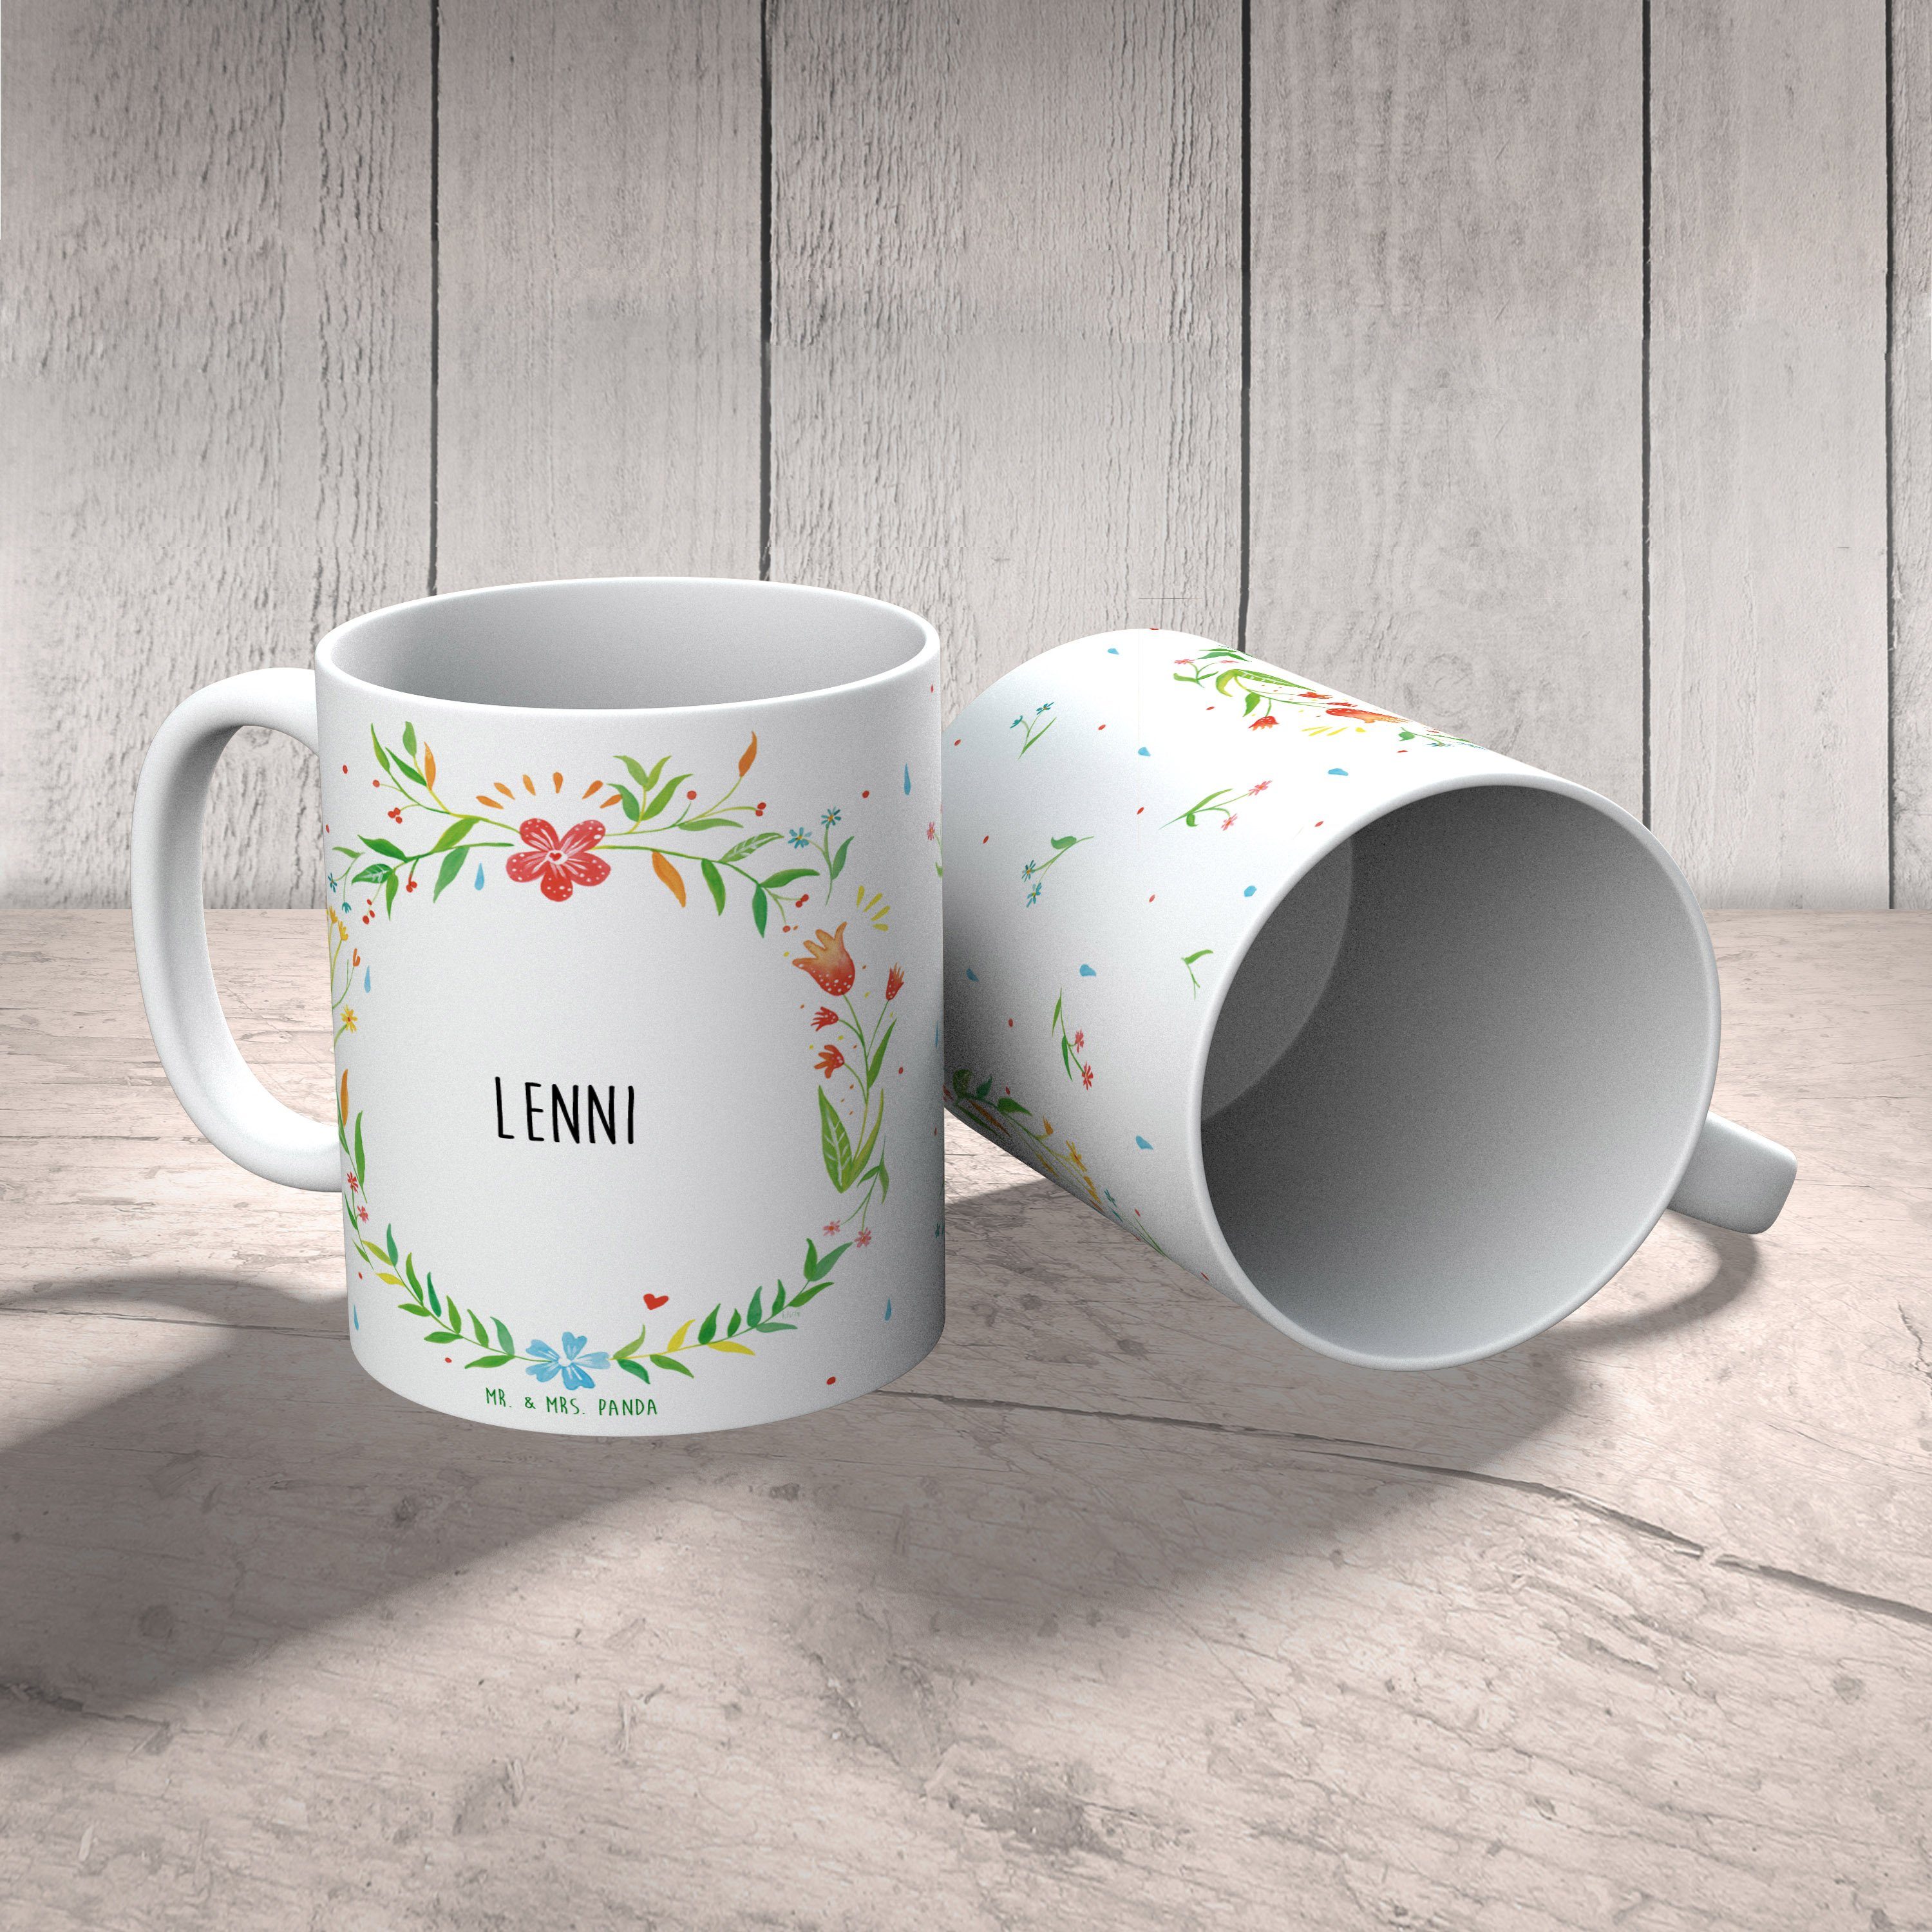 Mr. & Mrs. Panda Tasse Keramik - Büro Tasse, Motive, Tasse Geschenk, Lenni Geschenk Tasse, Teebecher